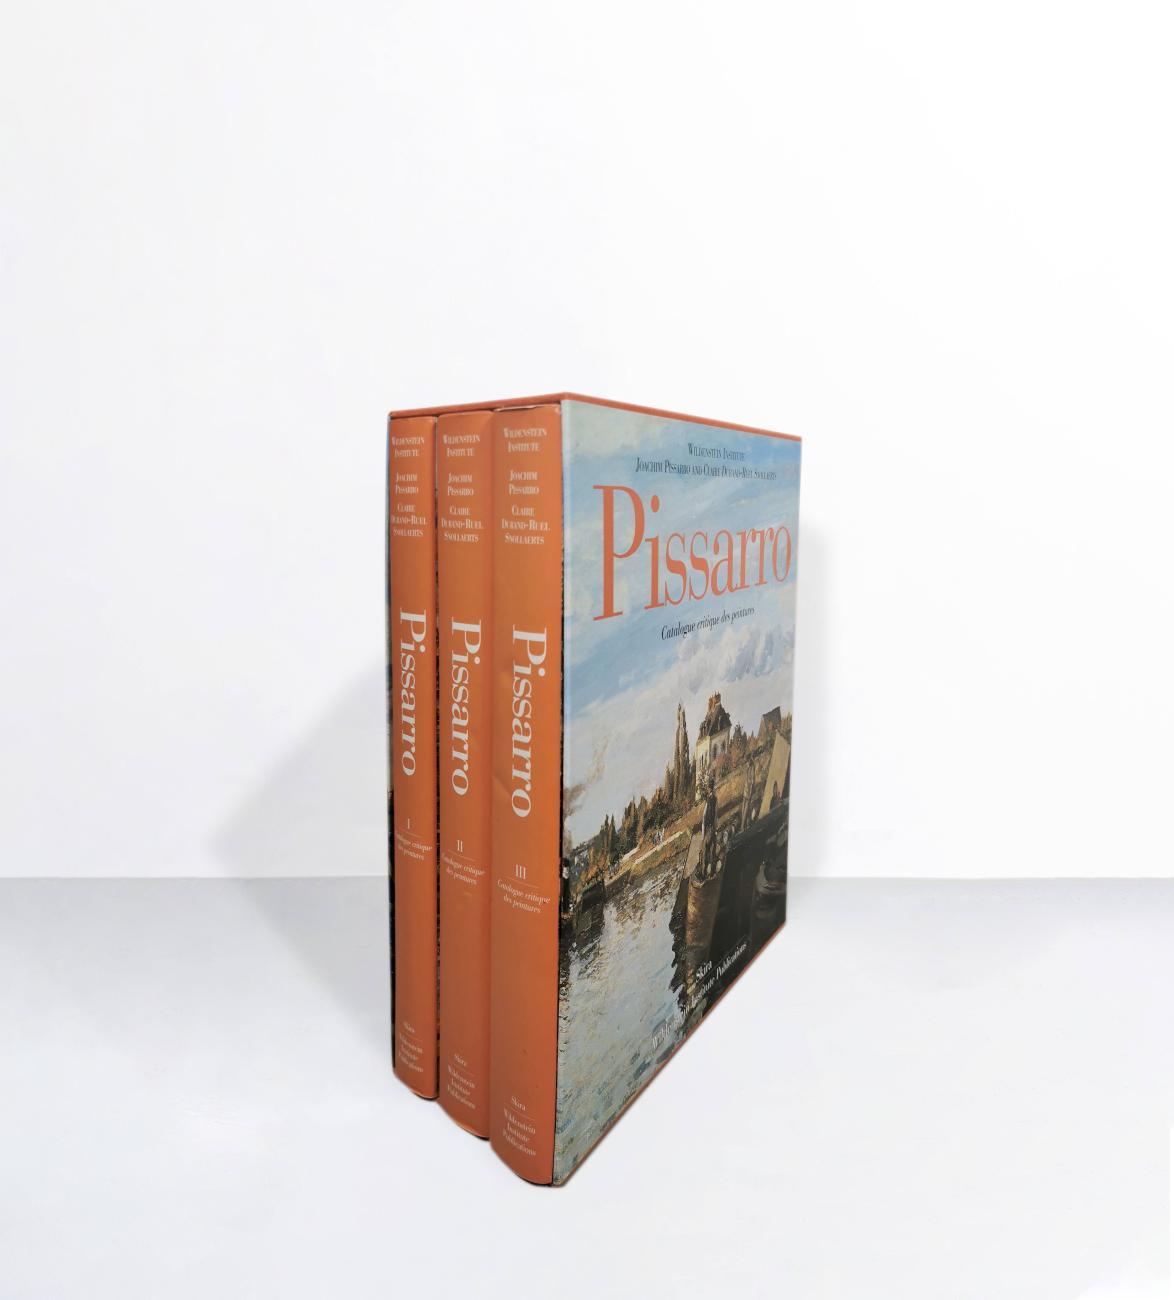 Pissarro, Catalogue critique des peintures